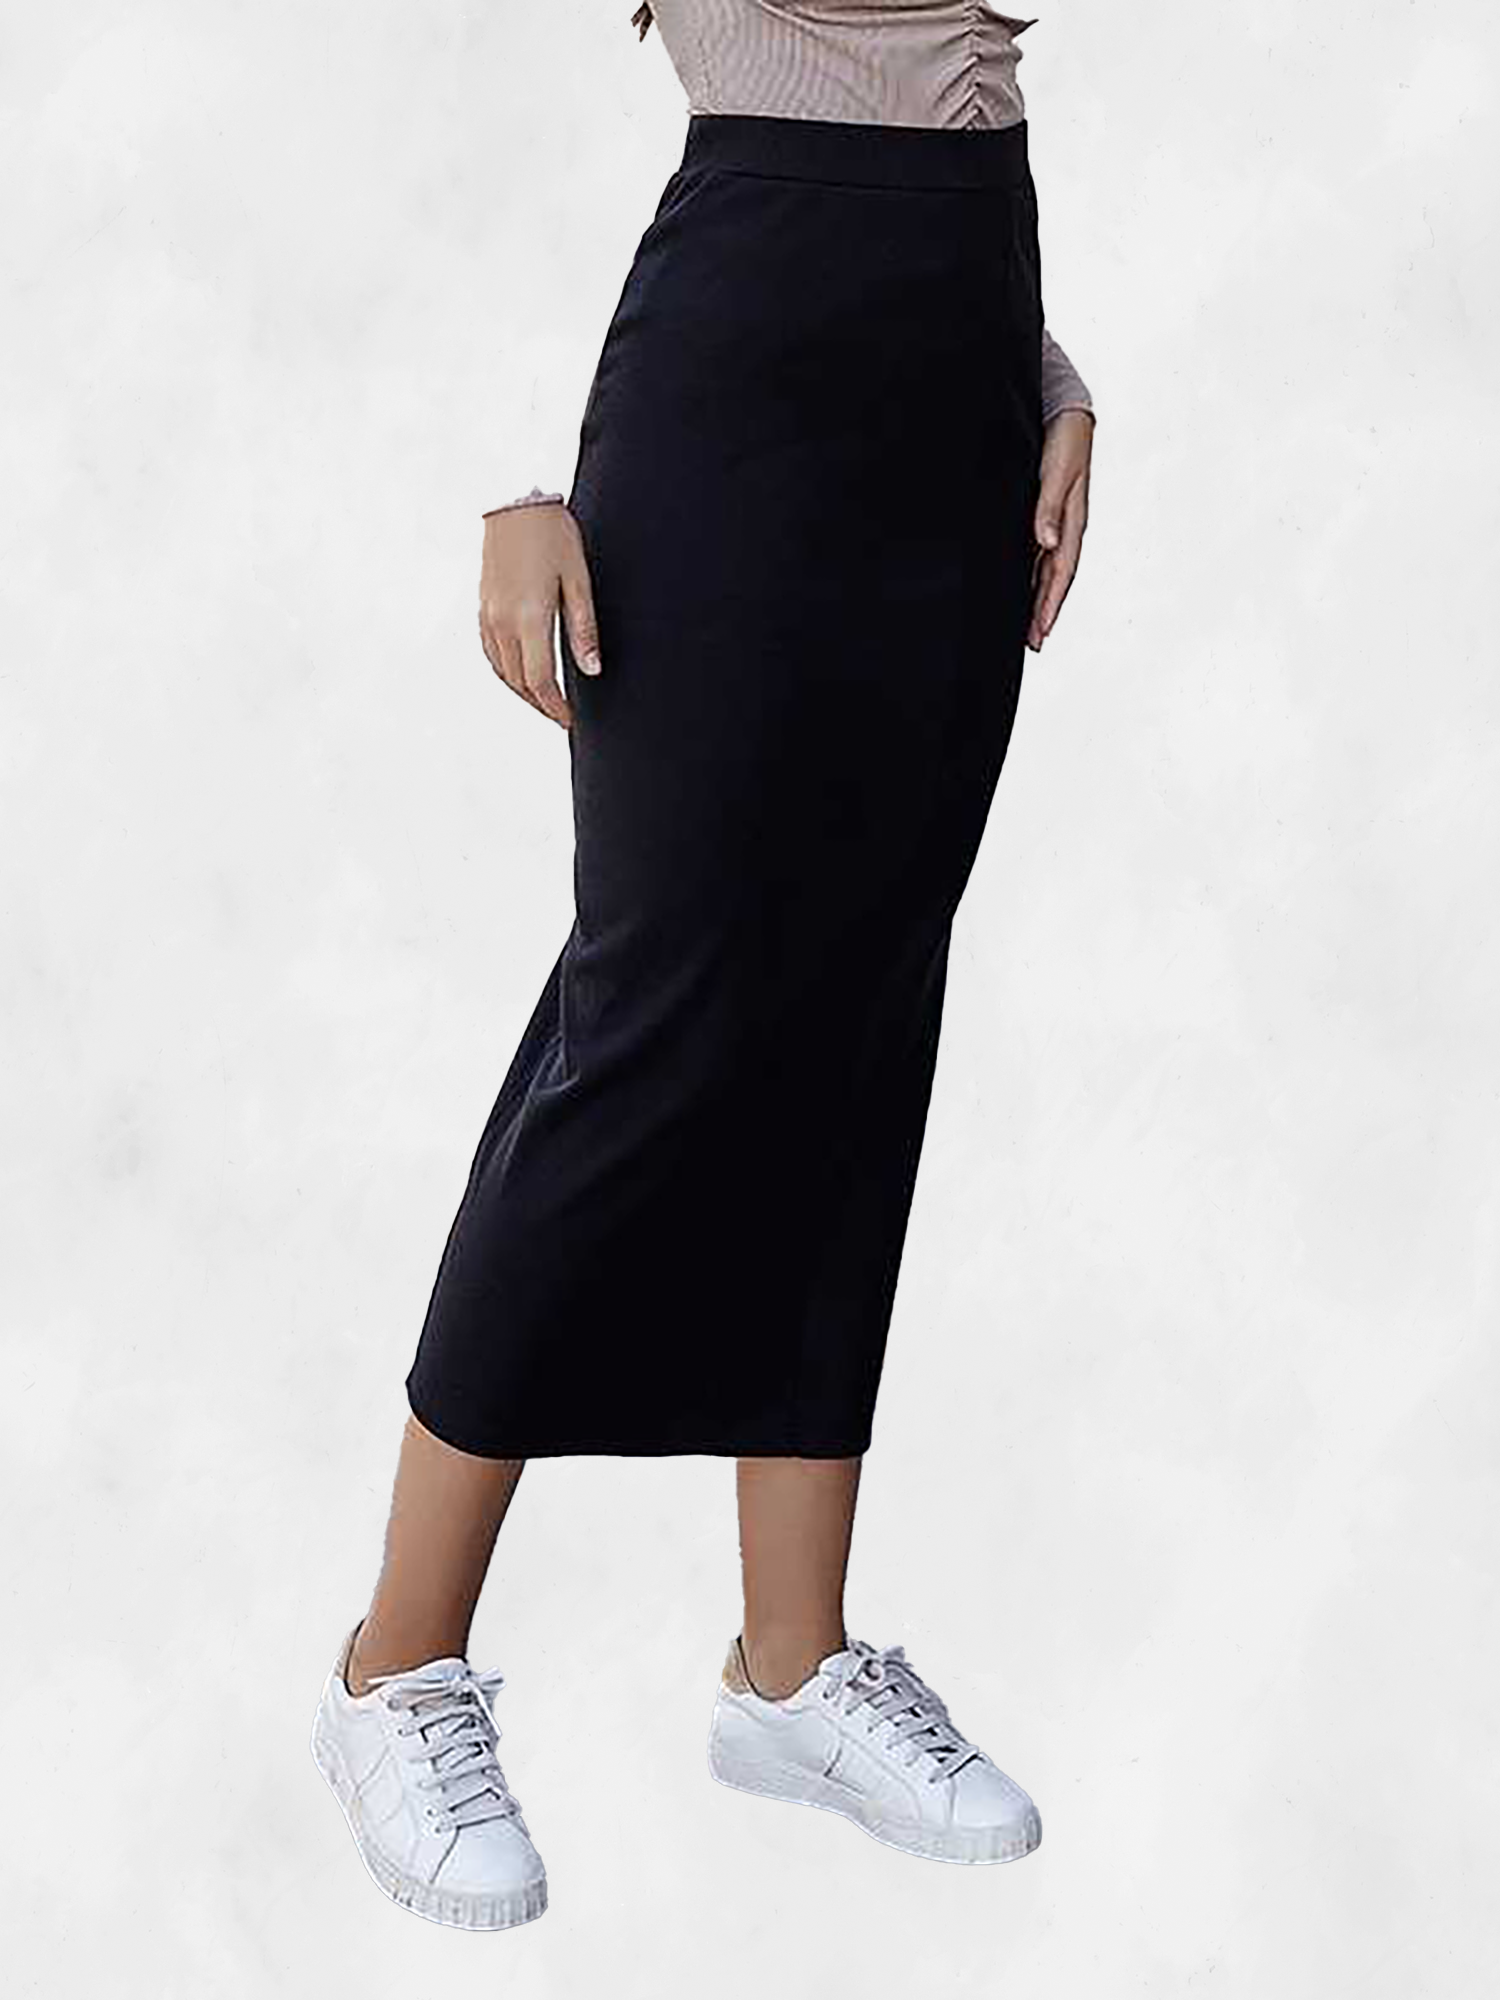 Asia Direct+ High Waist Fitted Skirt